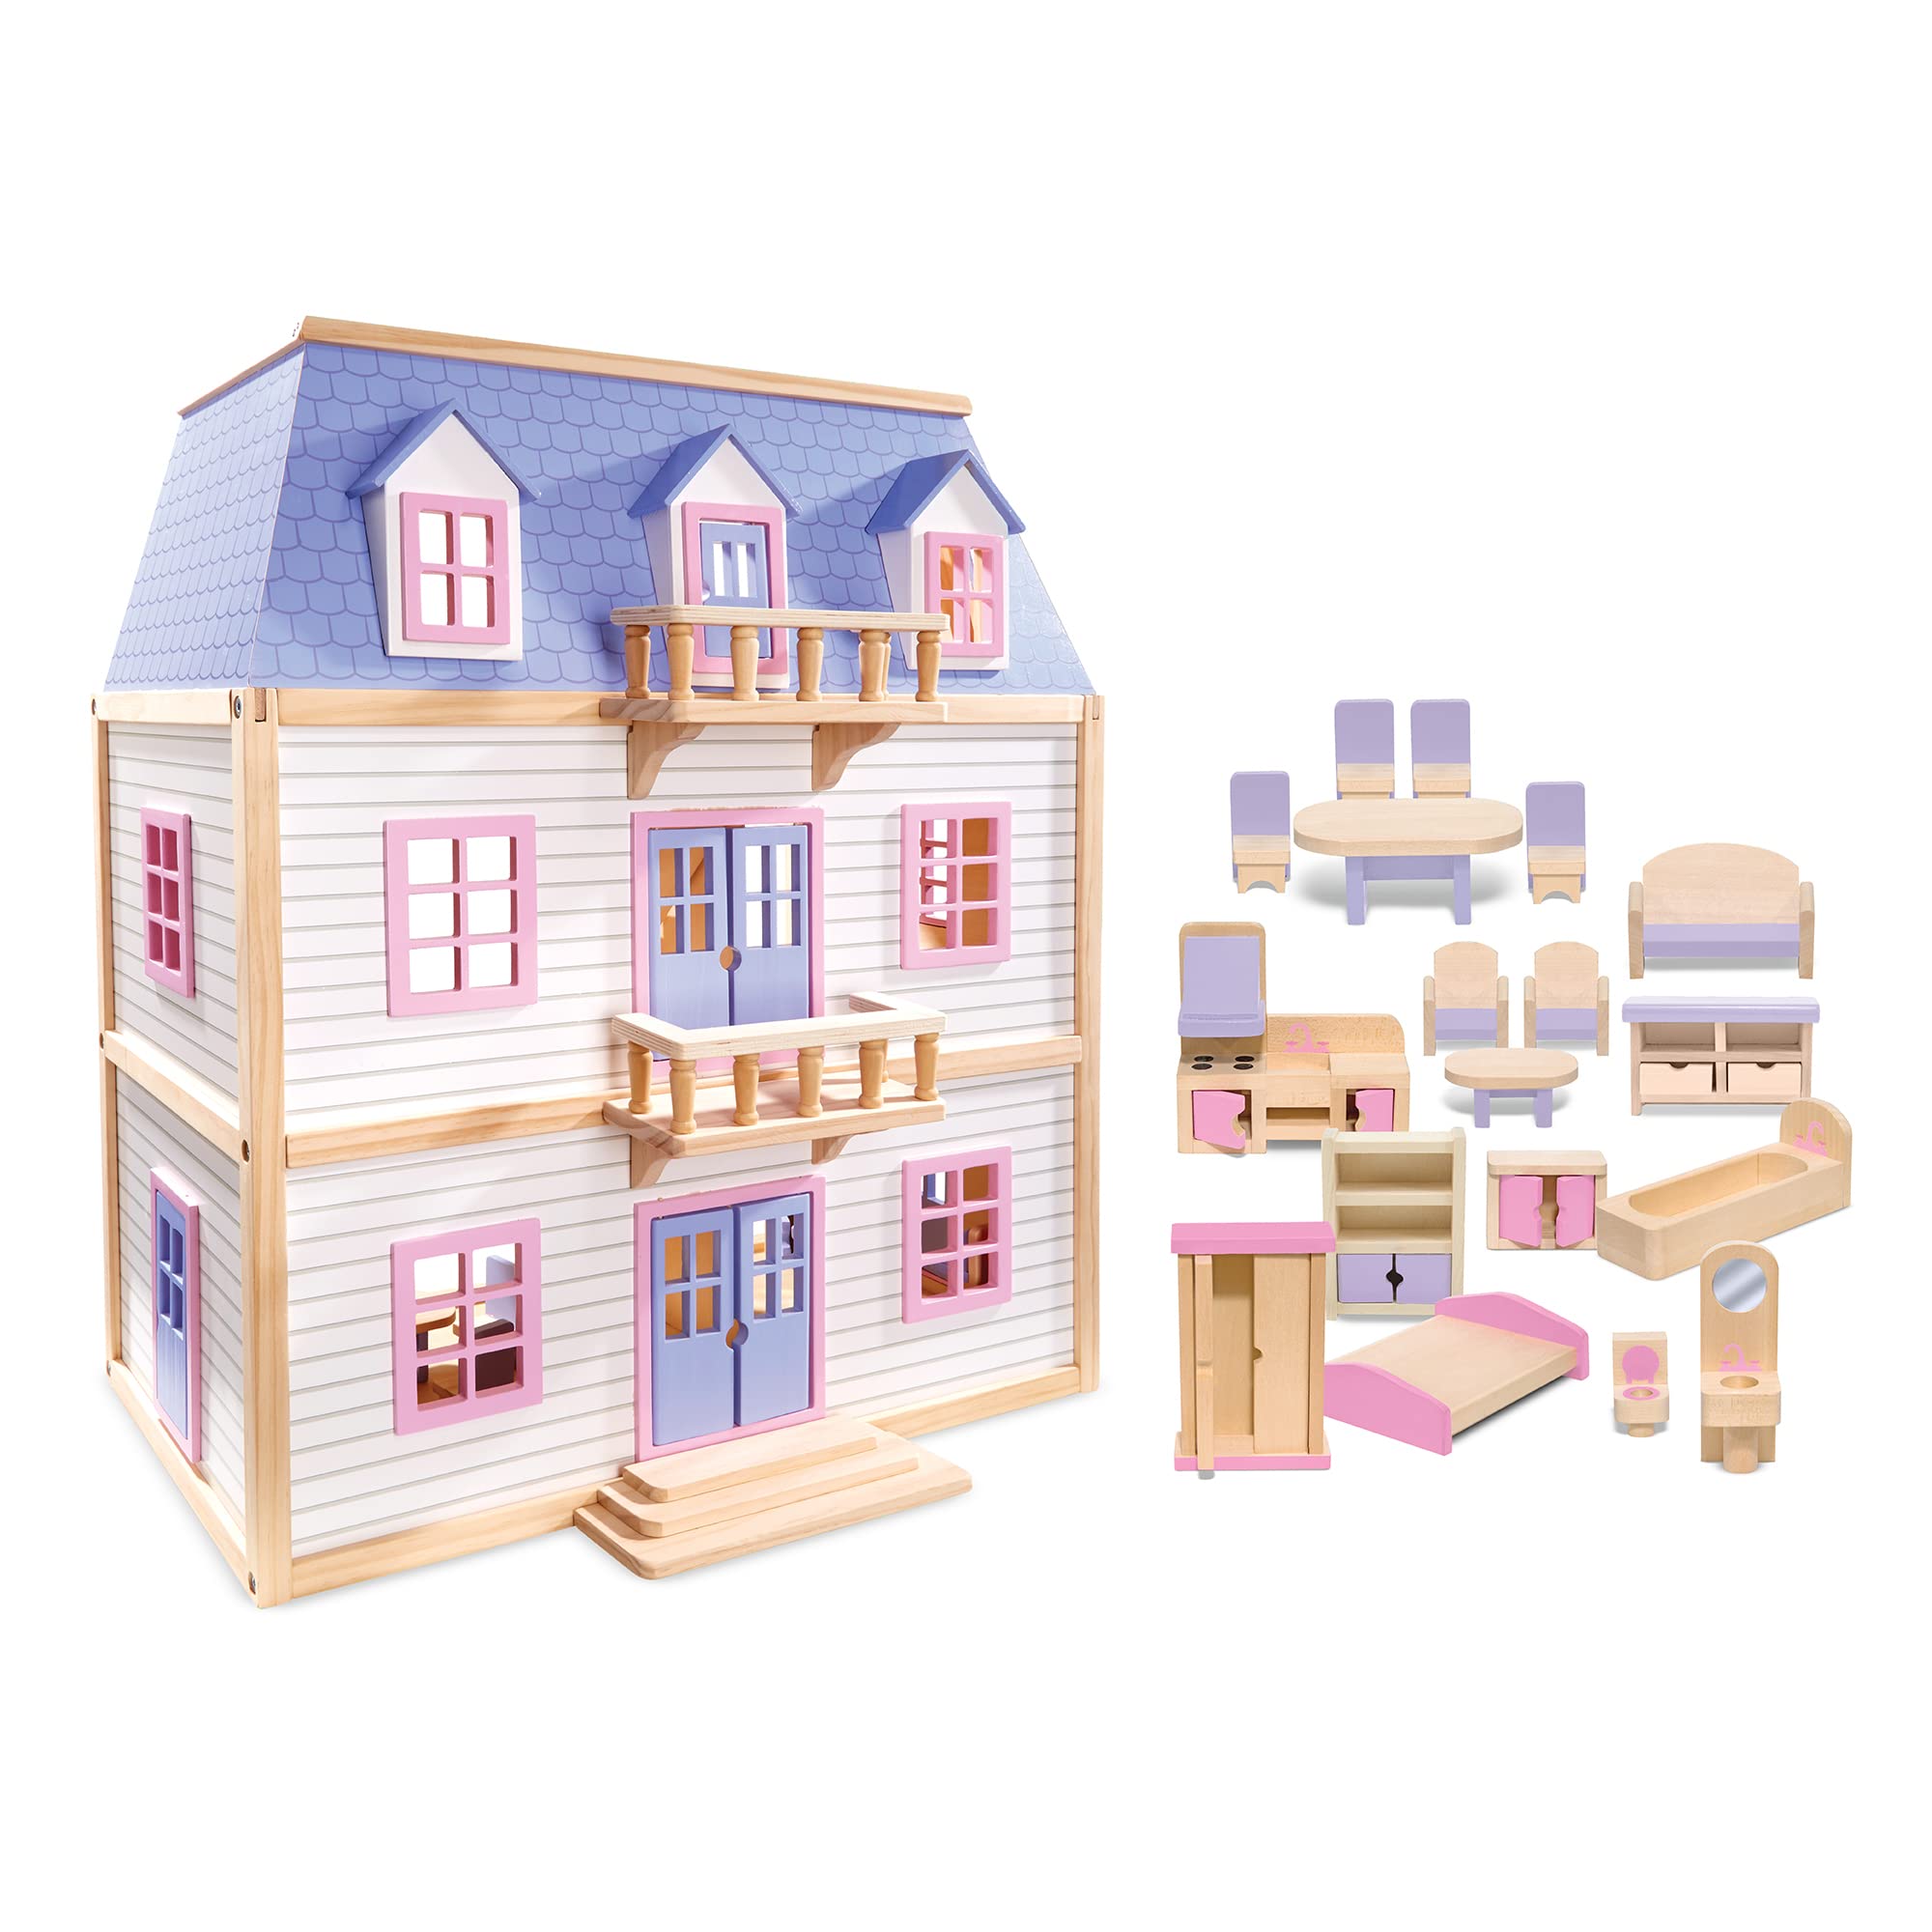 Melissa Doug Wooden Multi-Level Dollhouse SIOC - Wooden Multi-Story Pretend Play Dollhouse For Kids 送料無料